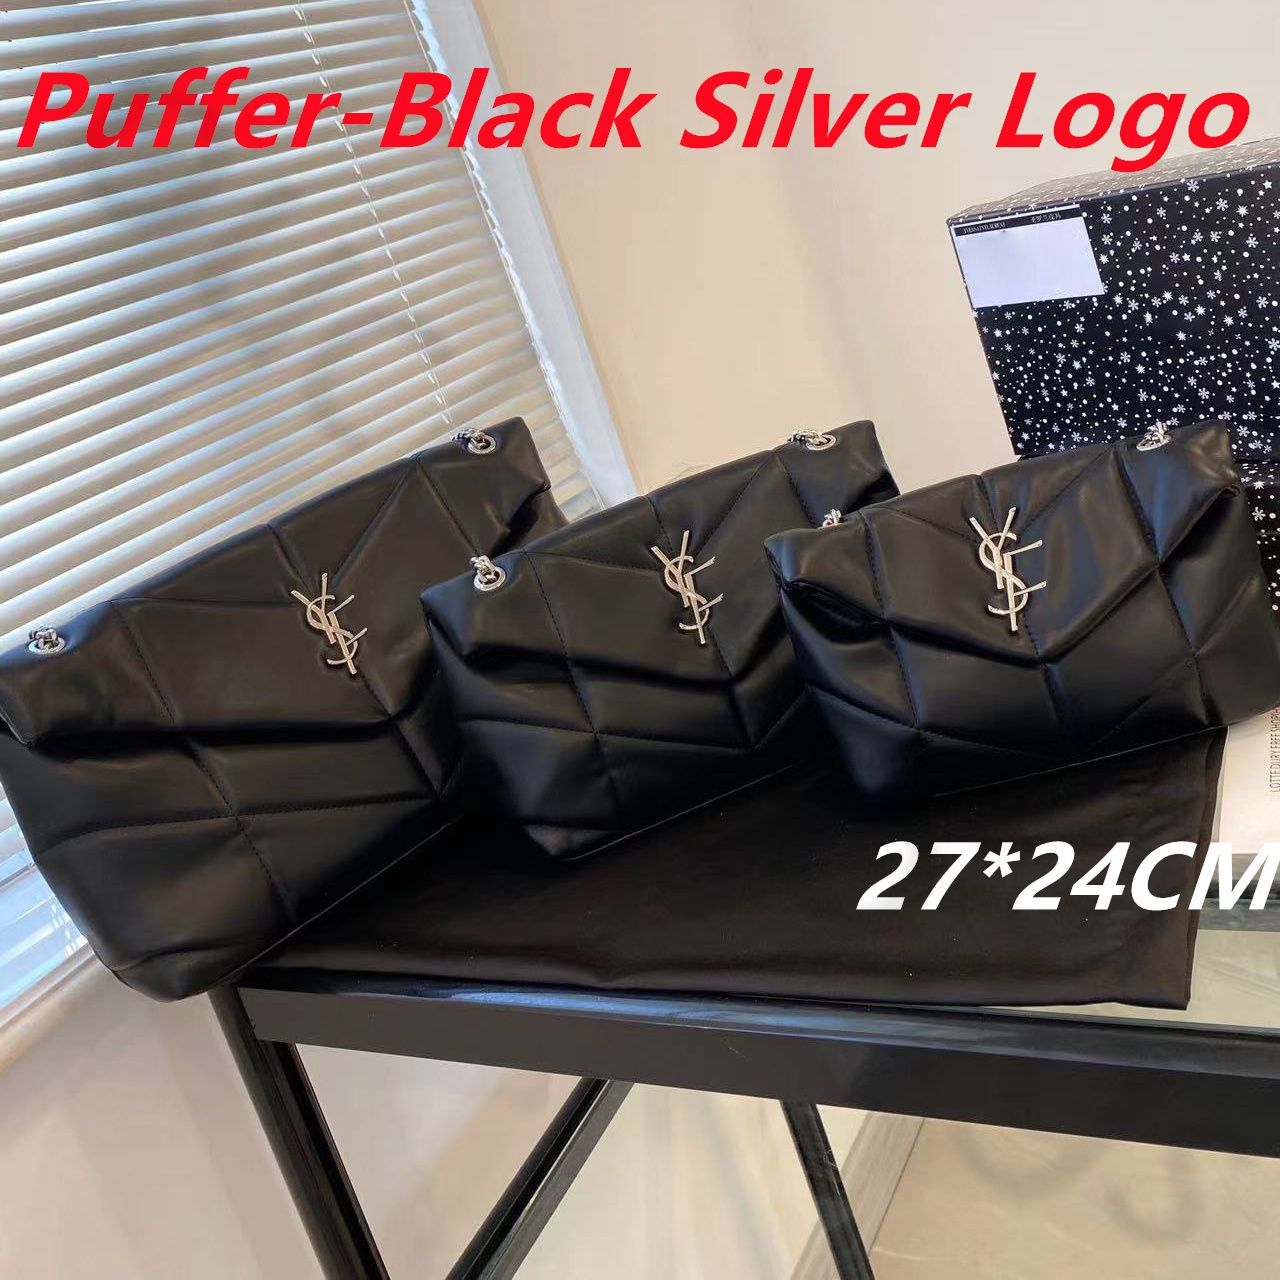 Puffer-Black Silver s